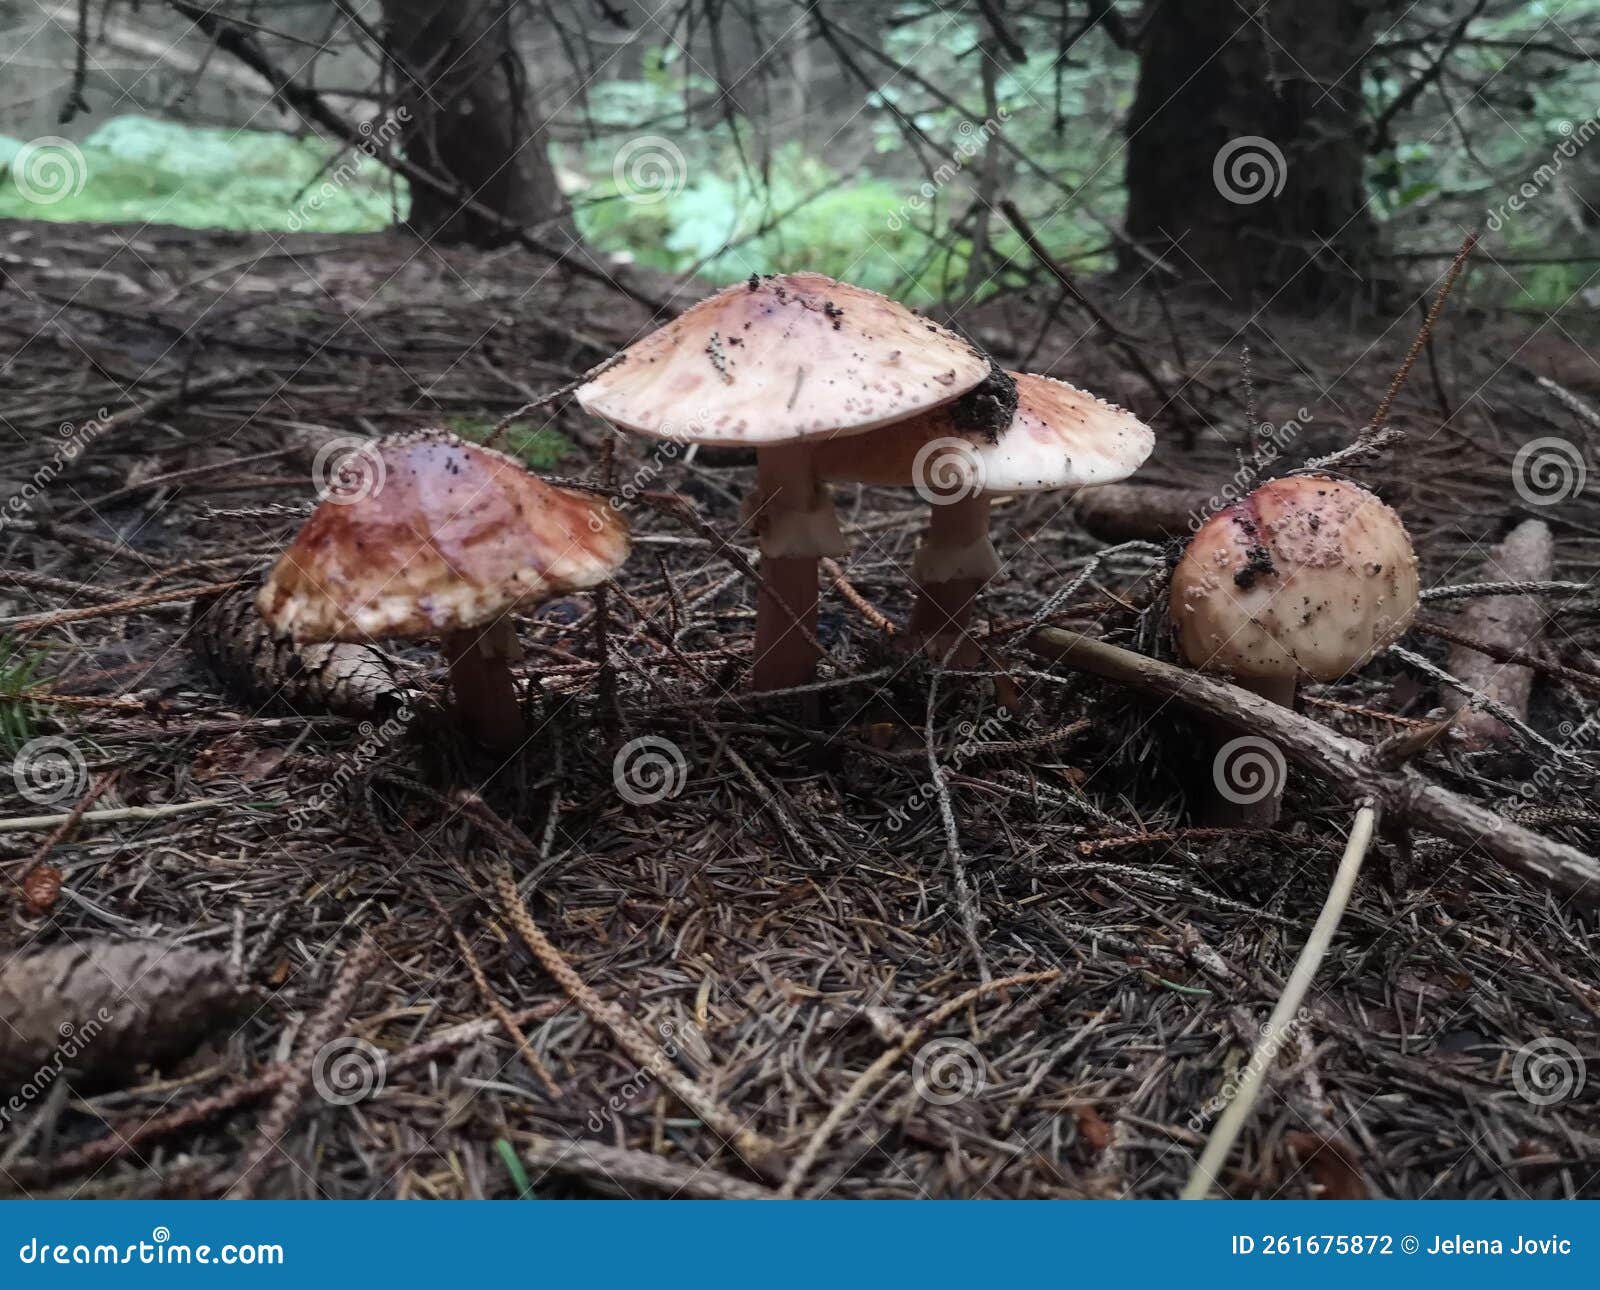 Download Nature Mushroom HD Wallpaper by jan zwiener